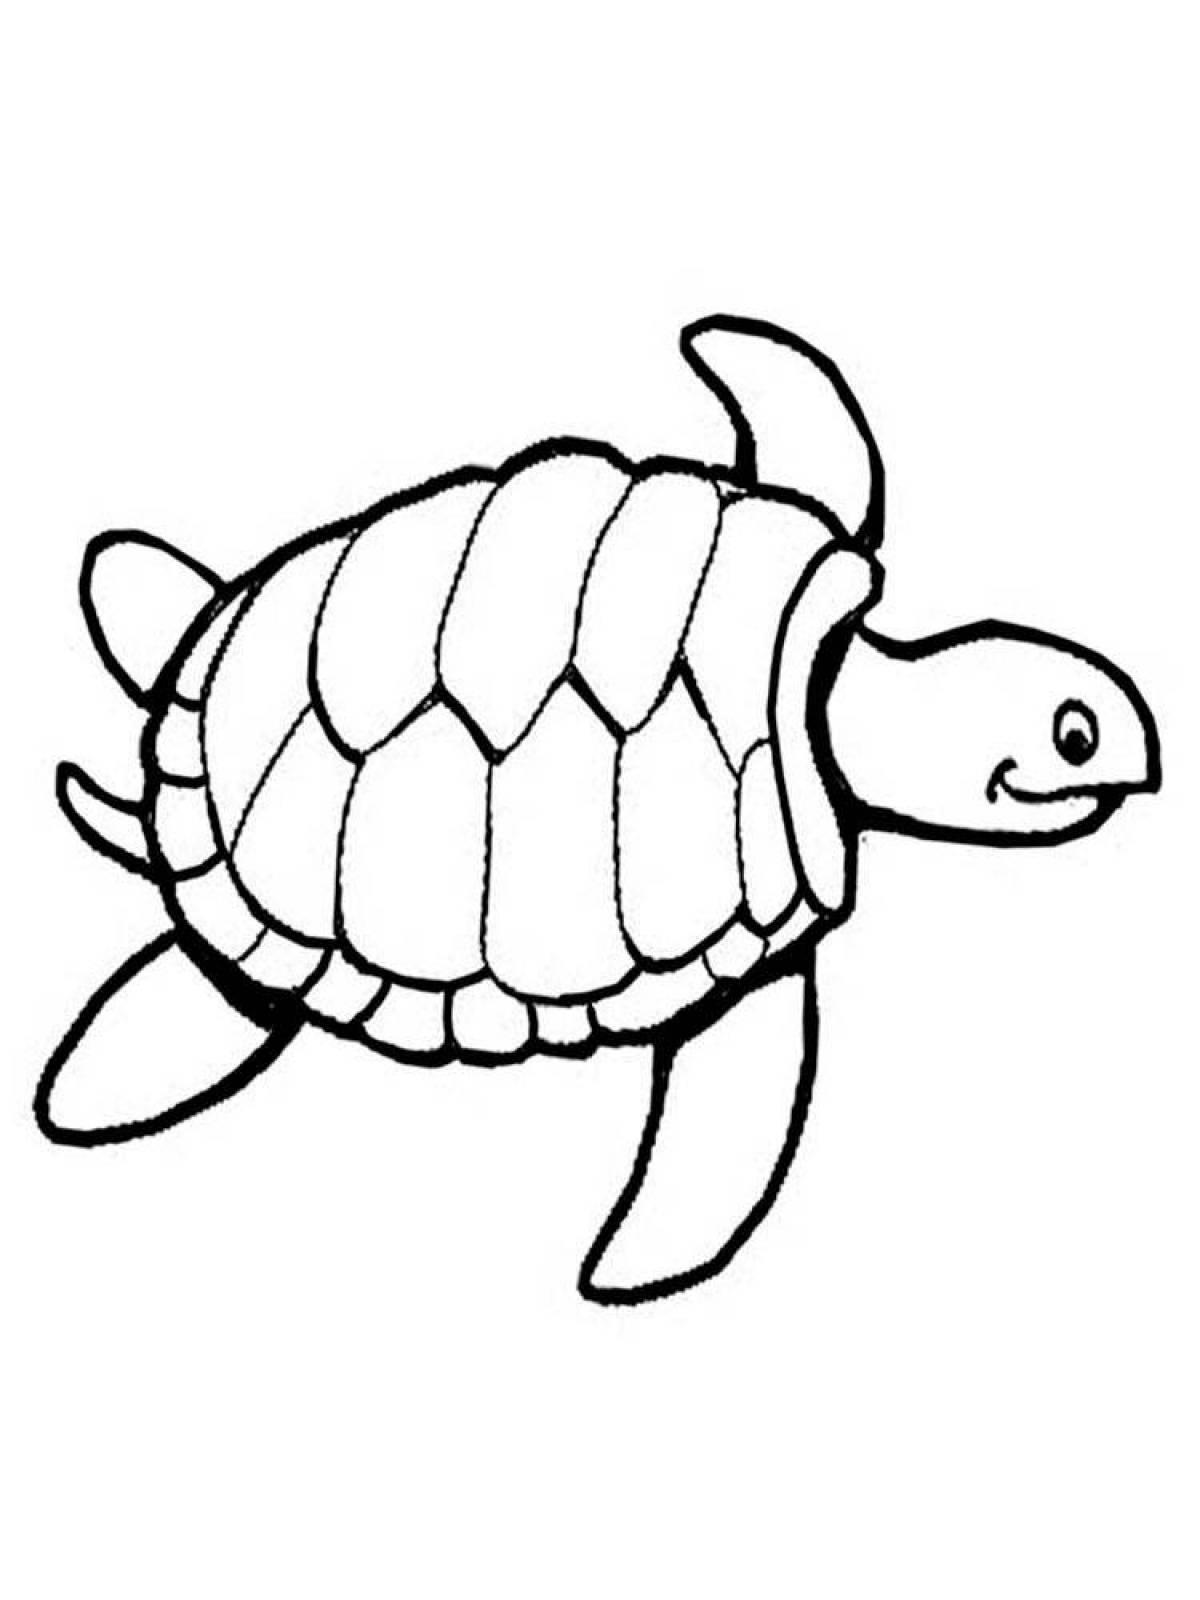 Children's turtle coloring book